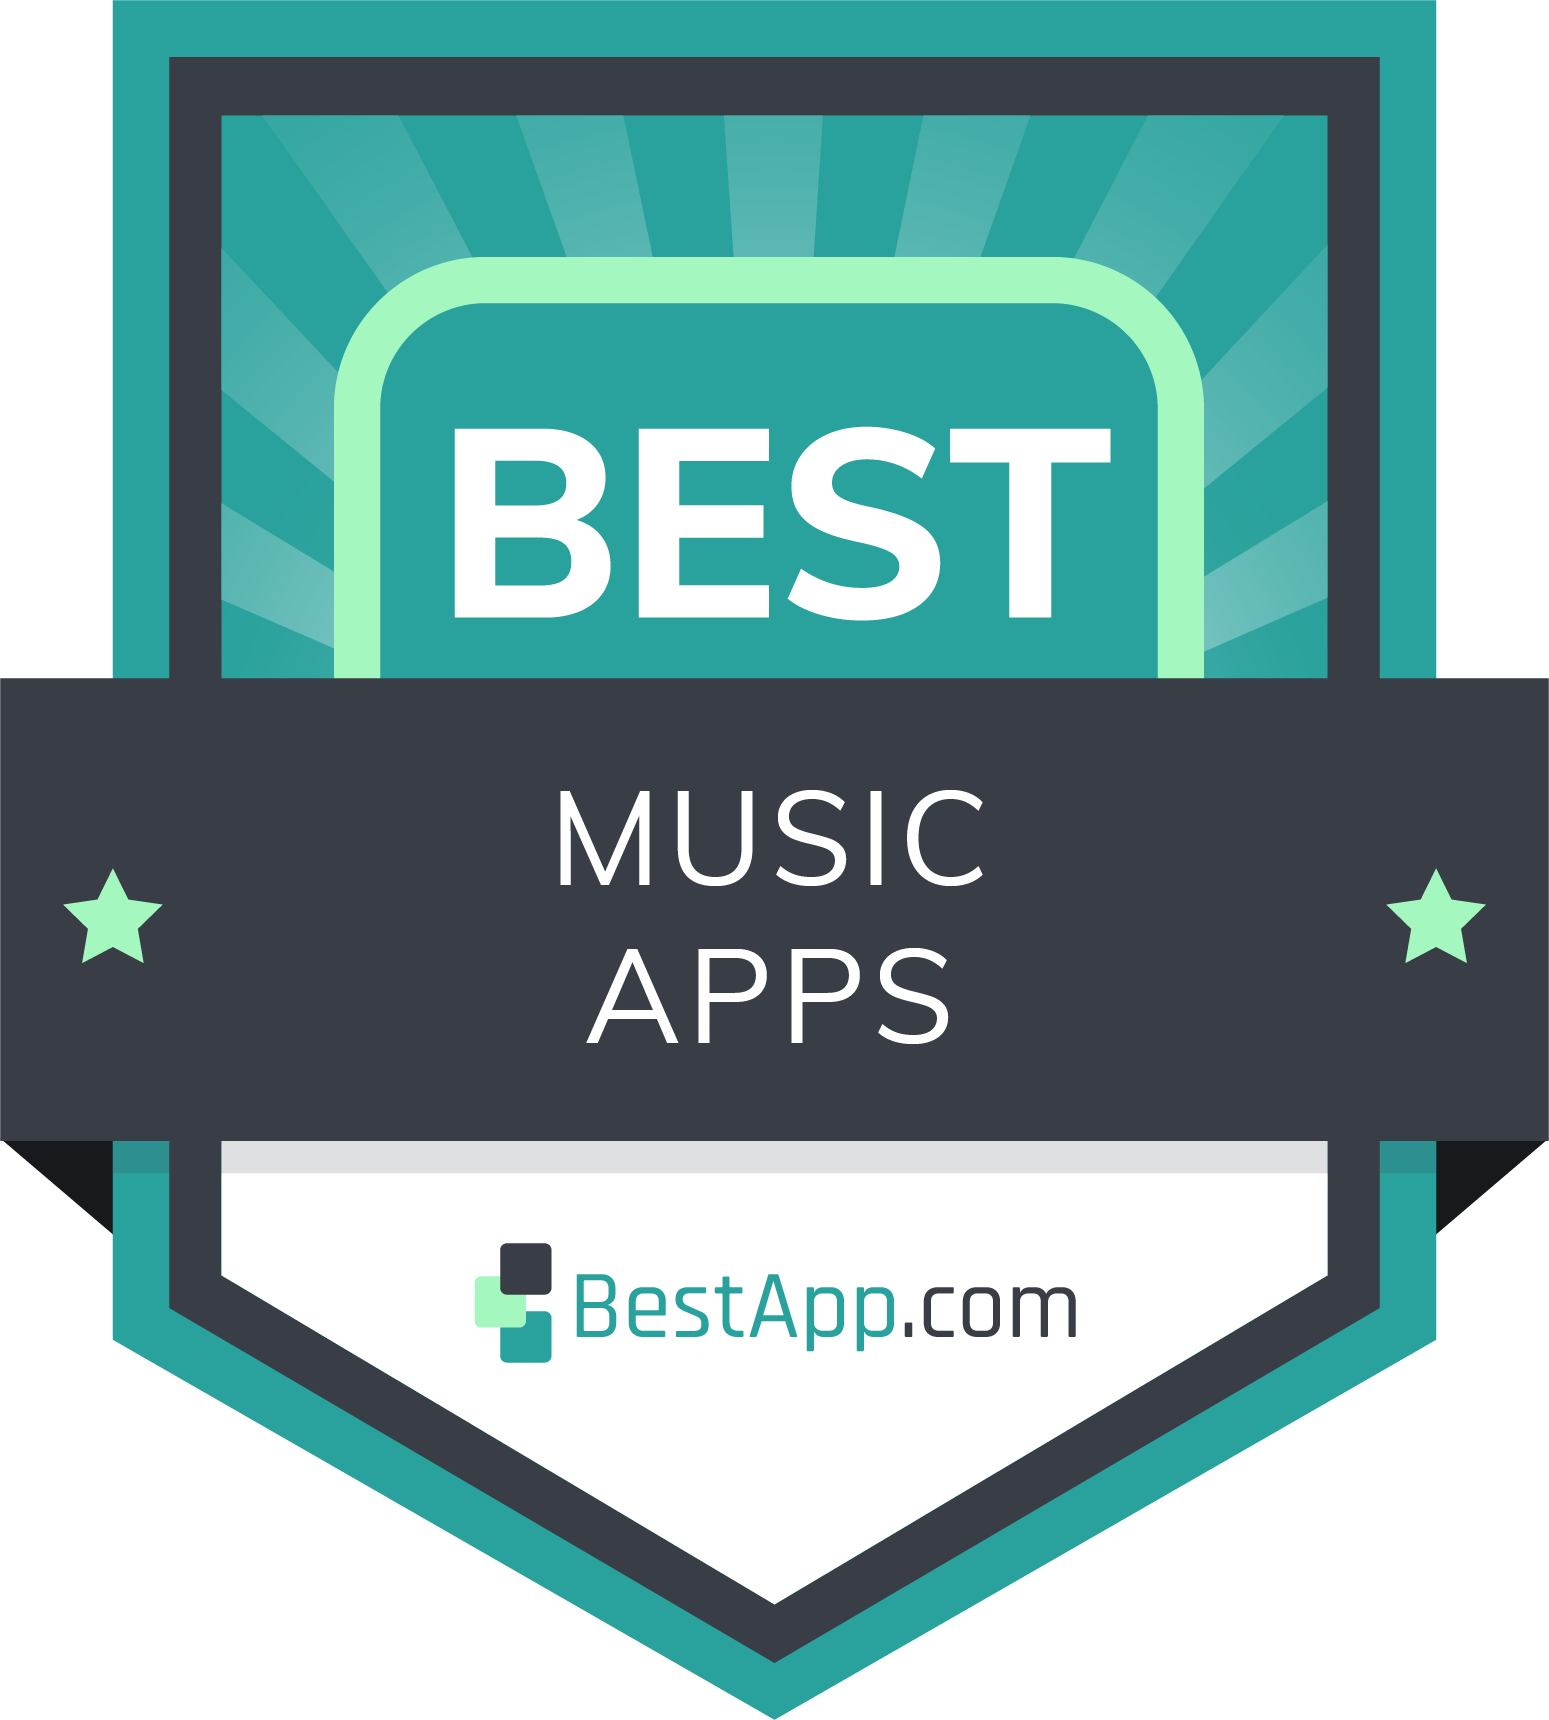 Best Music Apps Badge